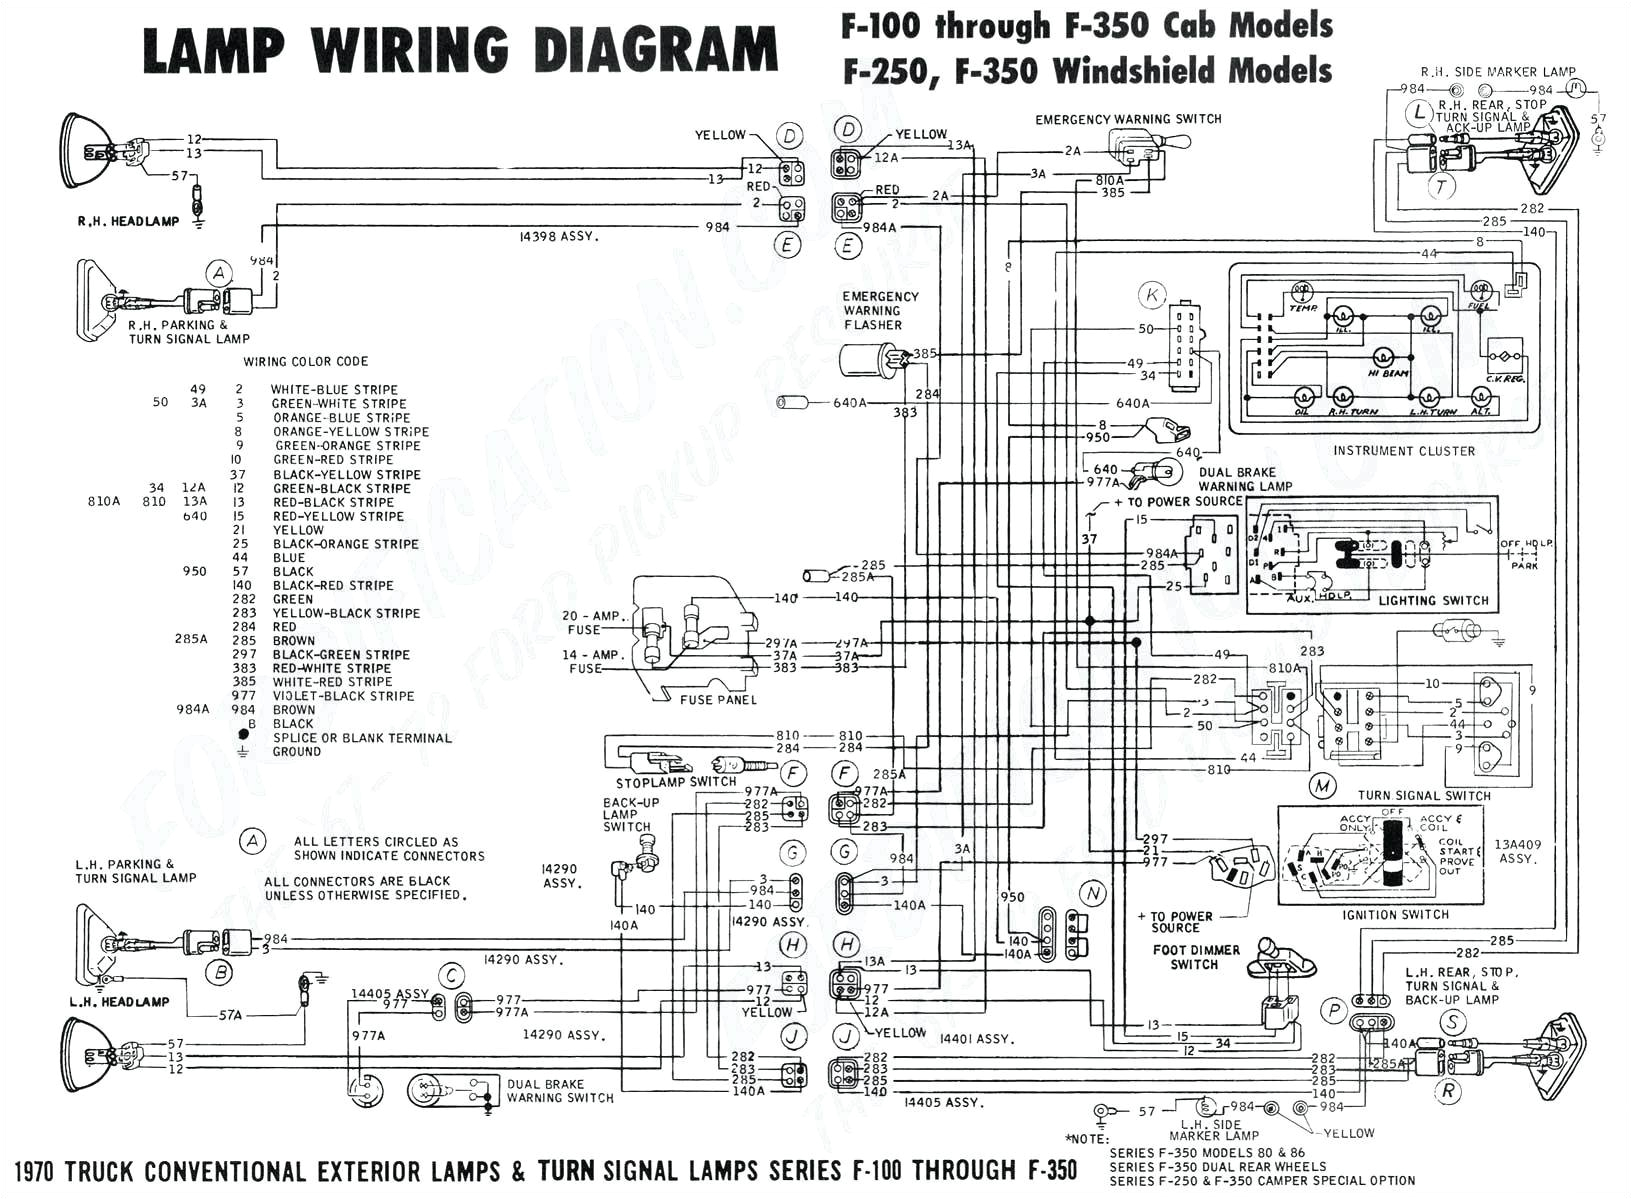 2006 ford E350 Wiring Diagram ford E350 Wiring Diagrams Wiring Diagram Blog